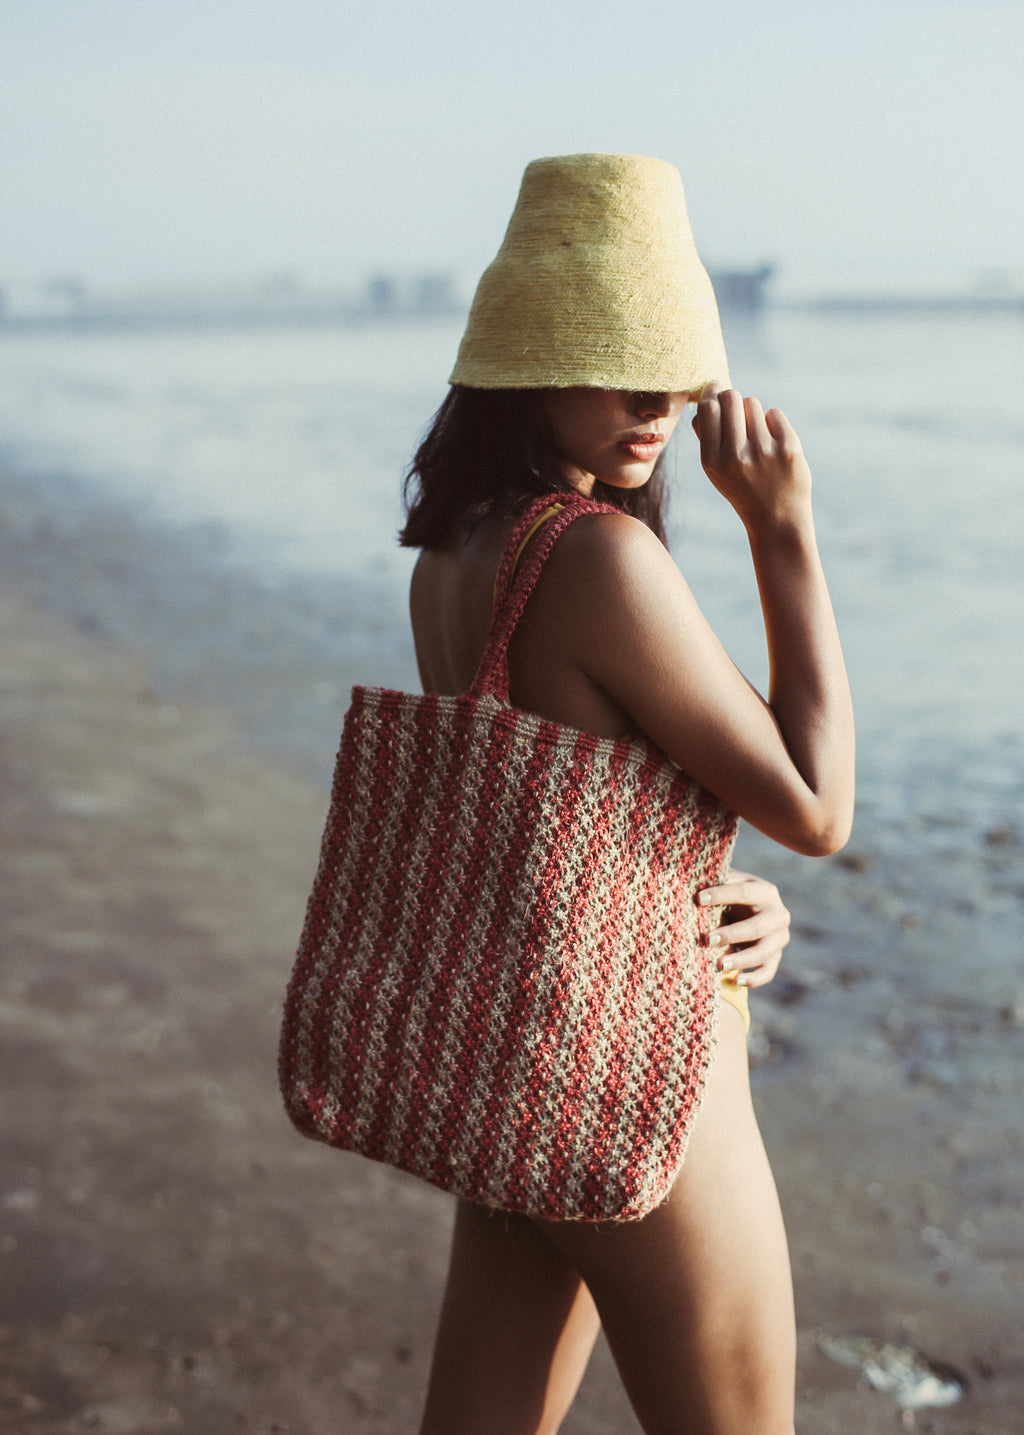 BrunnaCo Louisa Jute Tote Beach Bag. This beautiful striped tote bag in red and beige is handmade by artisans in Bali